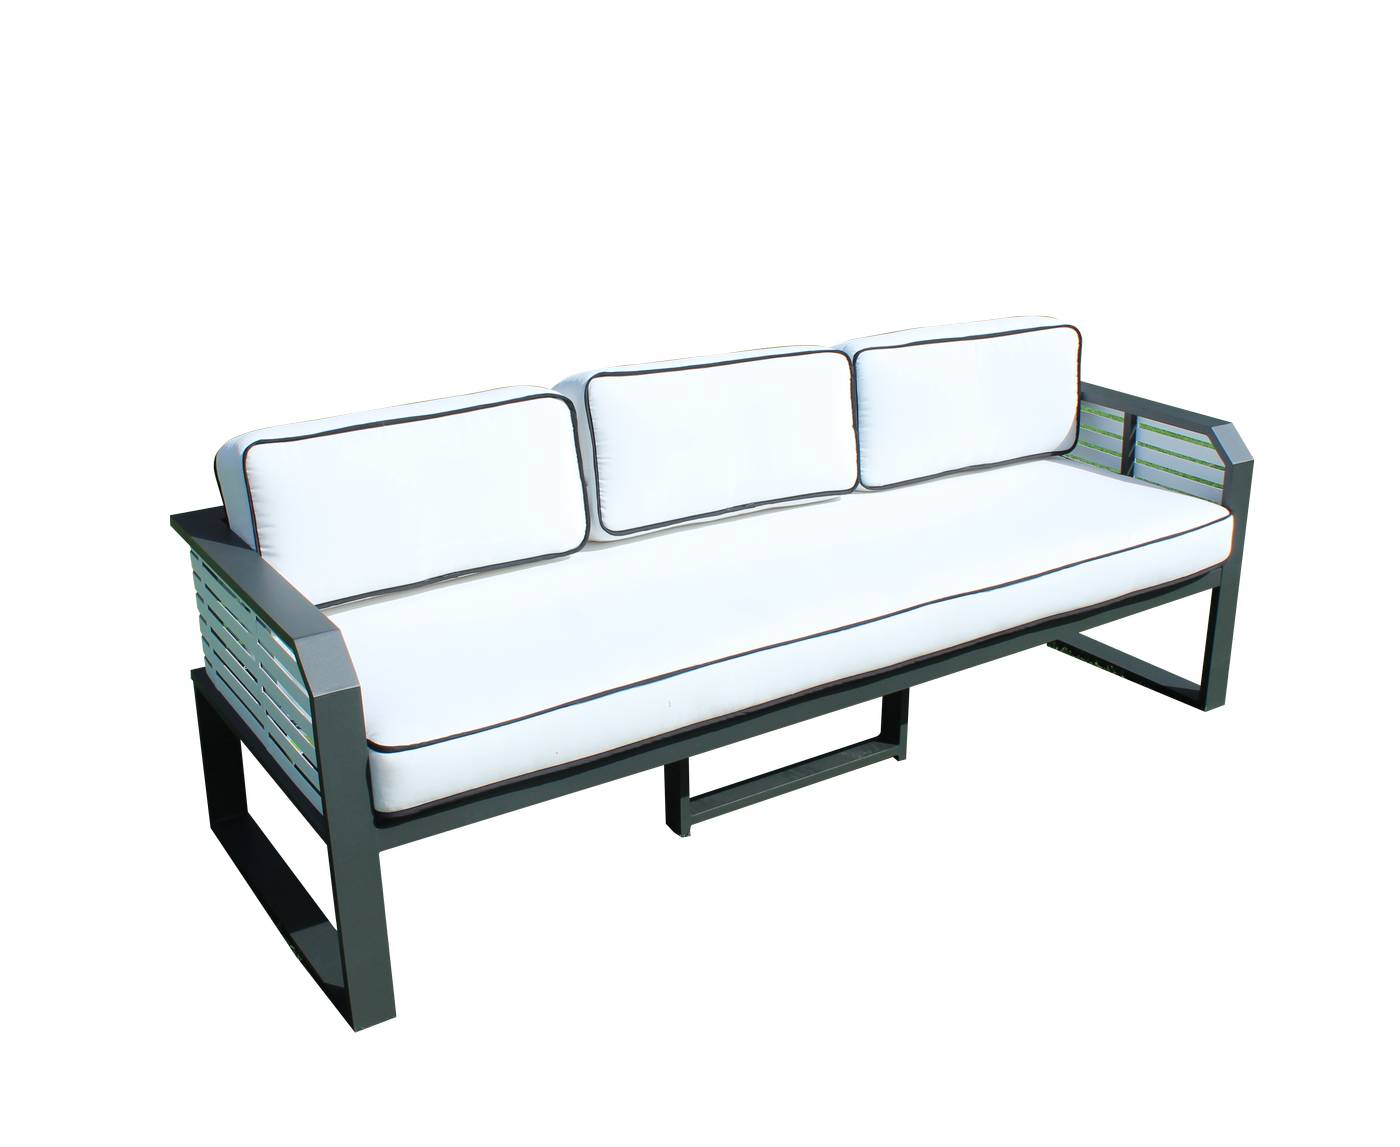 Set Aluminio Sira-8 - Coqueto conjunto de alumnio bicolor: 1 sofá de 3 plazas + 2 sillones + 1 mesa de centro.